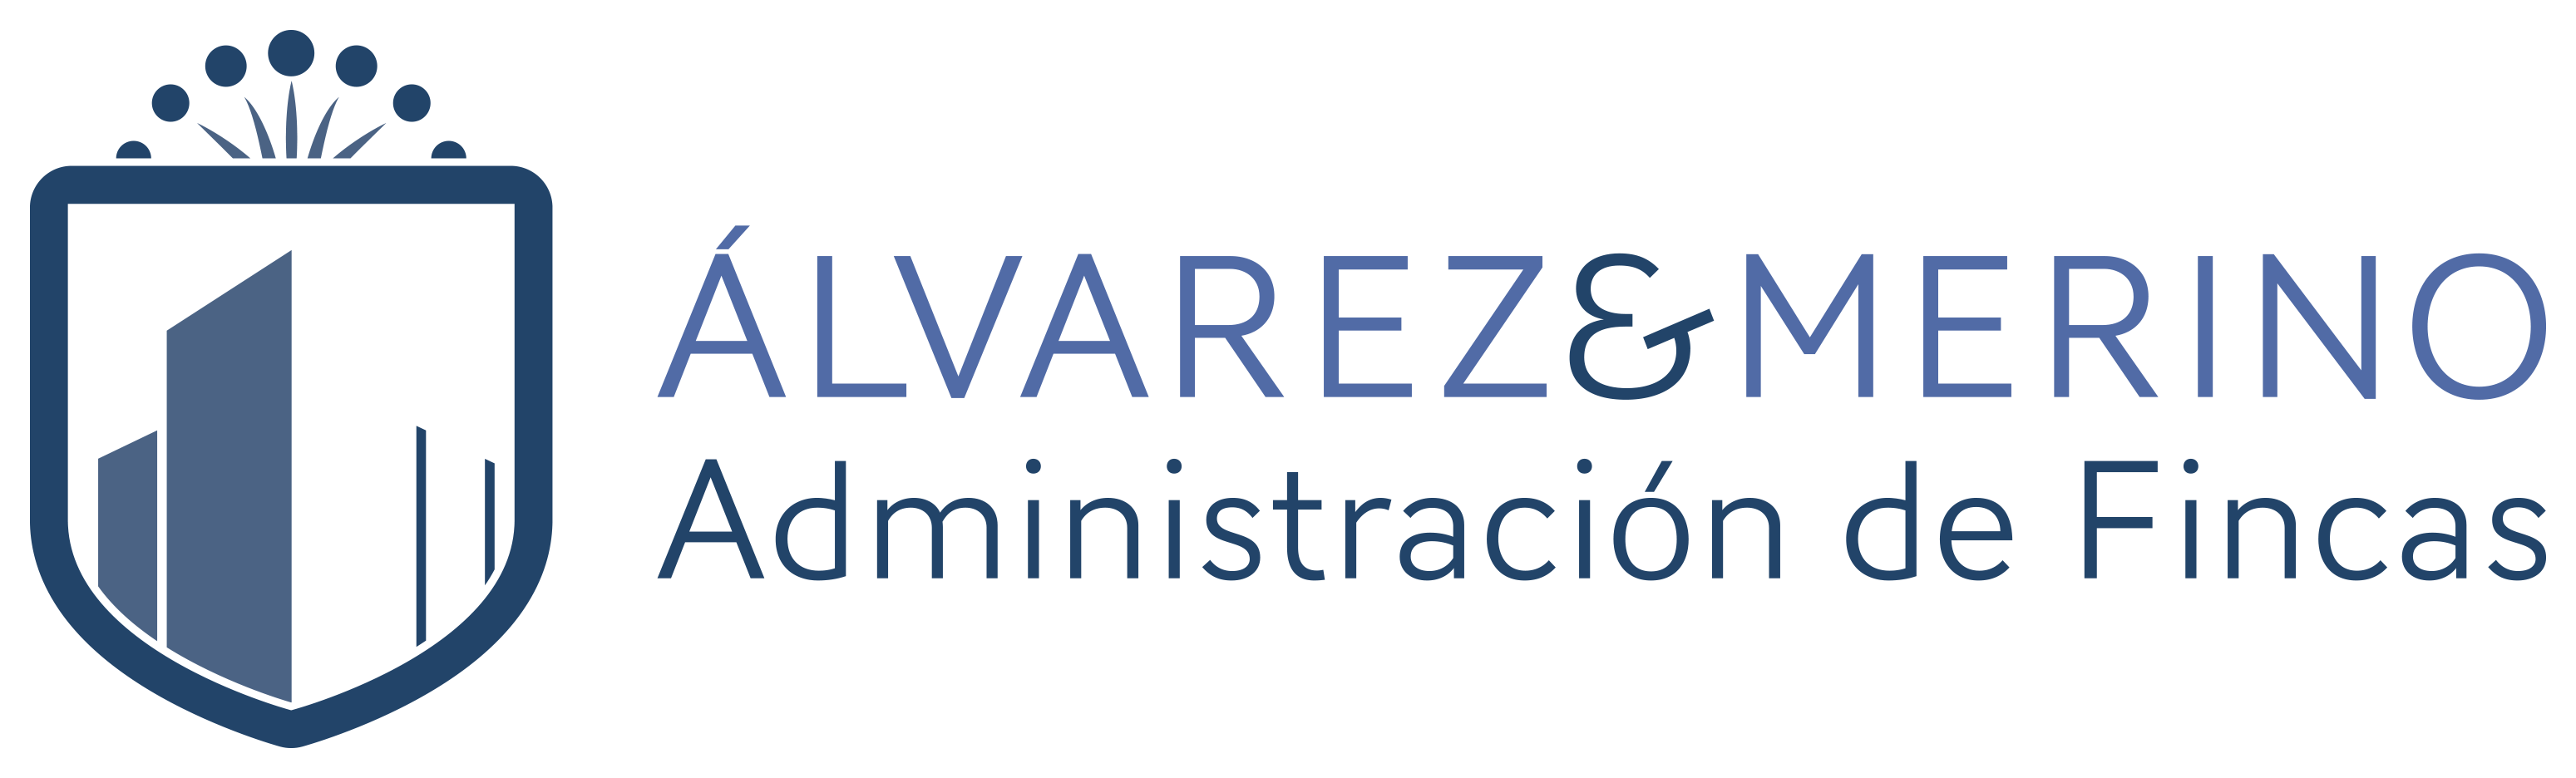 Logo Fincas Álvarez & Merino footer